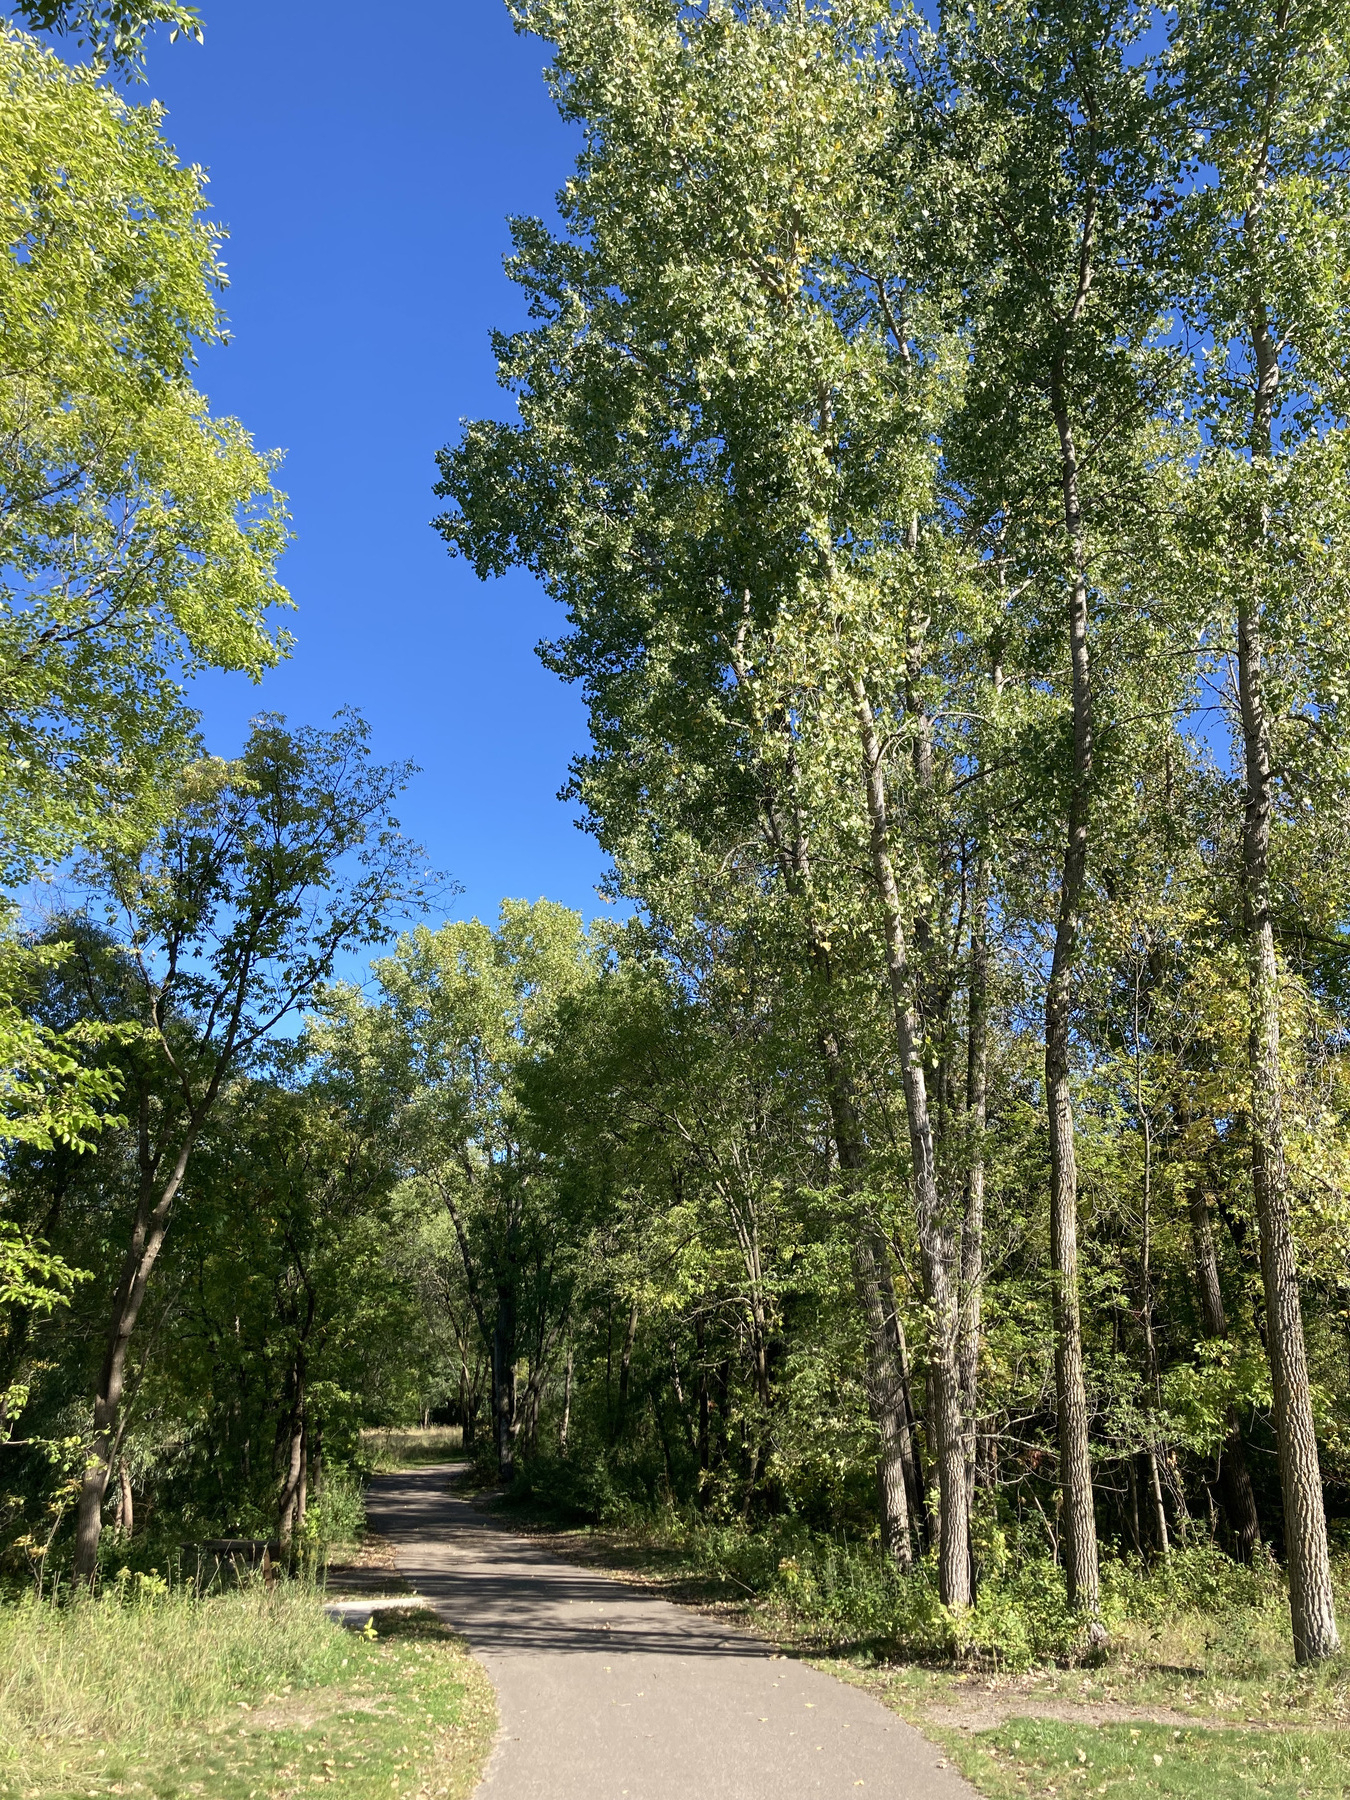 Blue skies, green trees, the trail ahead